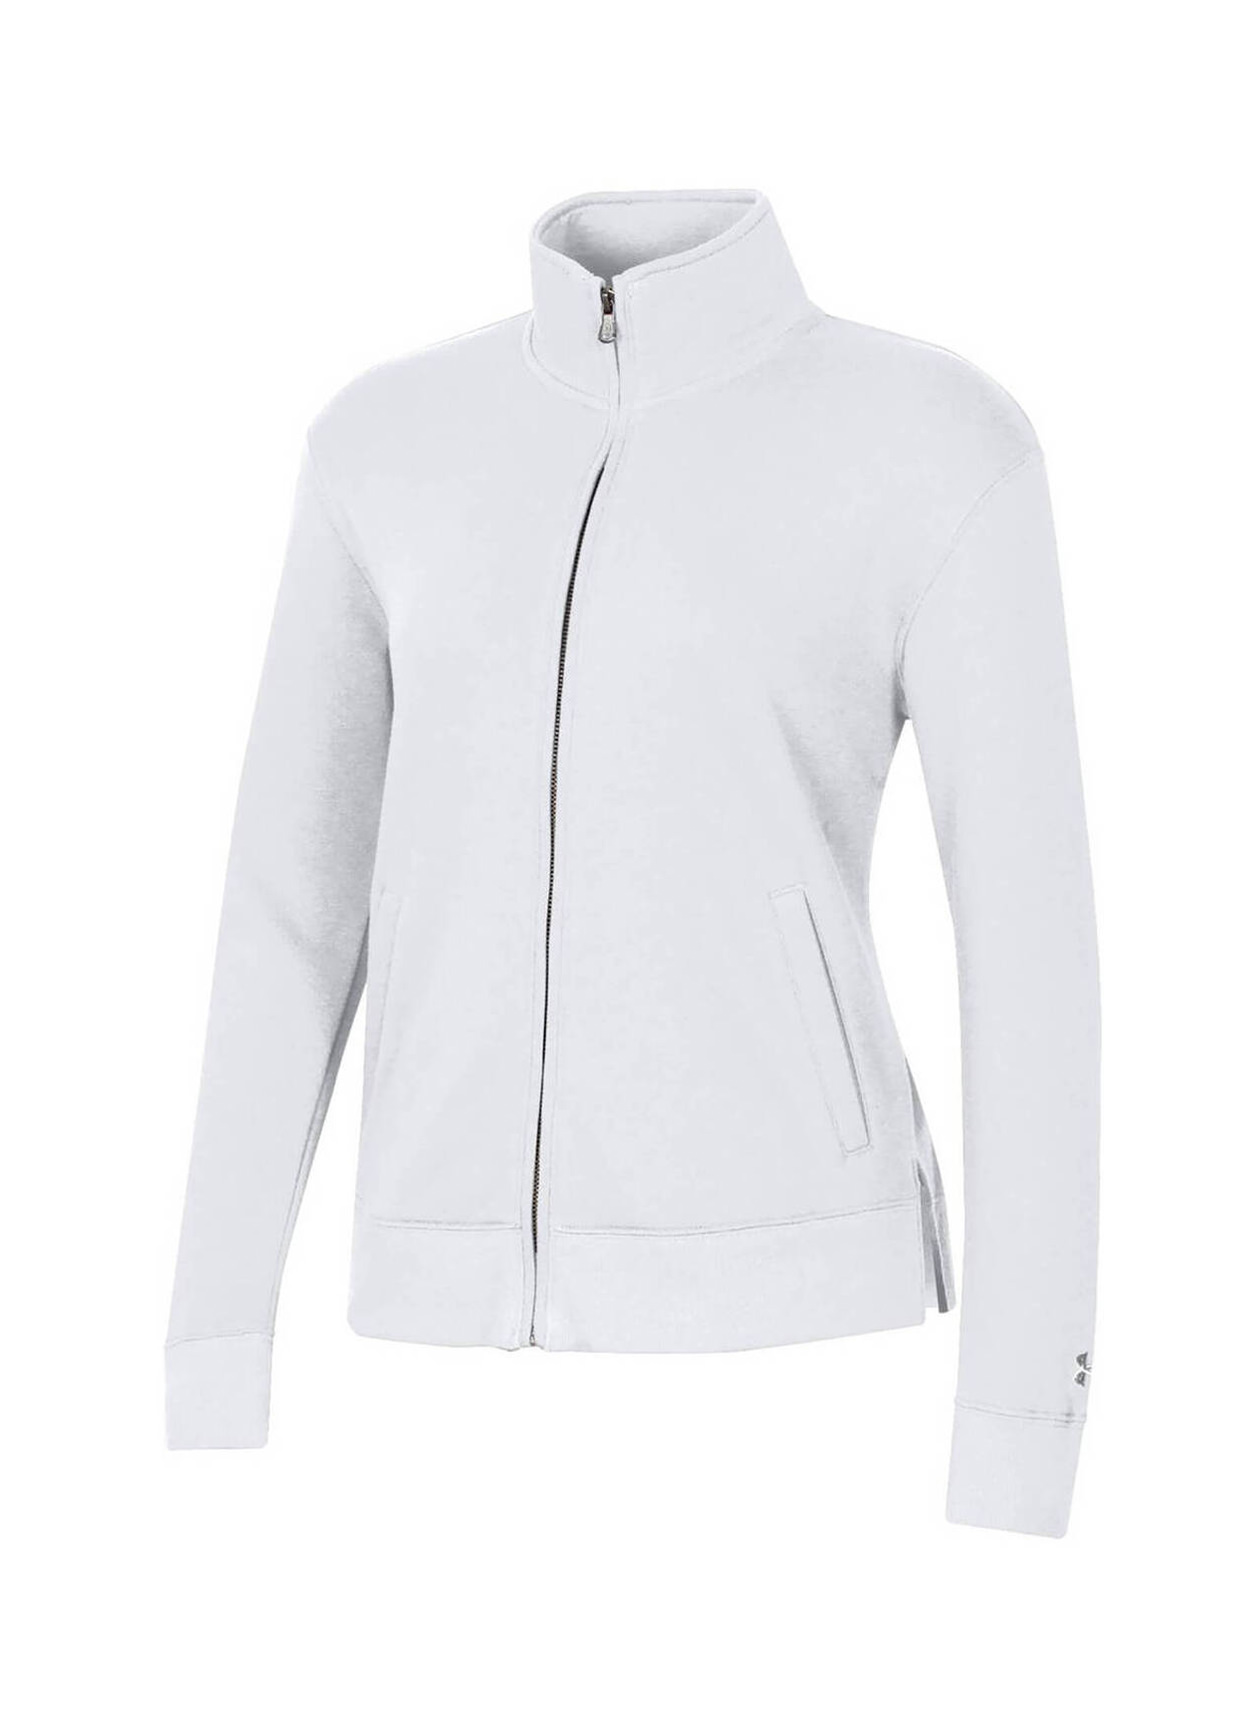 Under Armour Women's White All Day Fleece Jacket